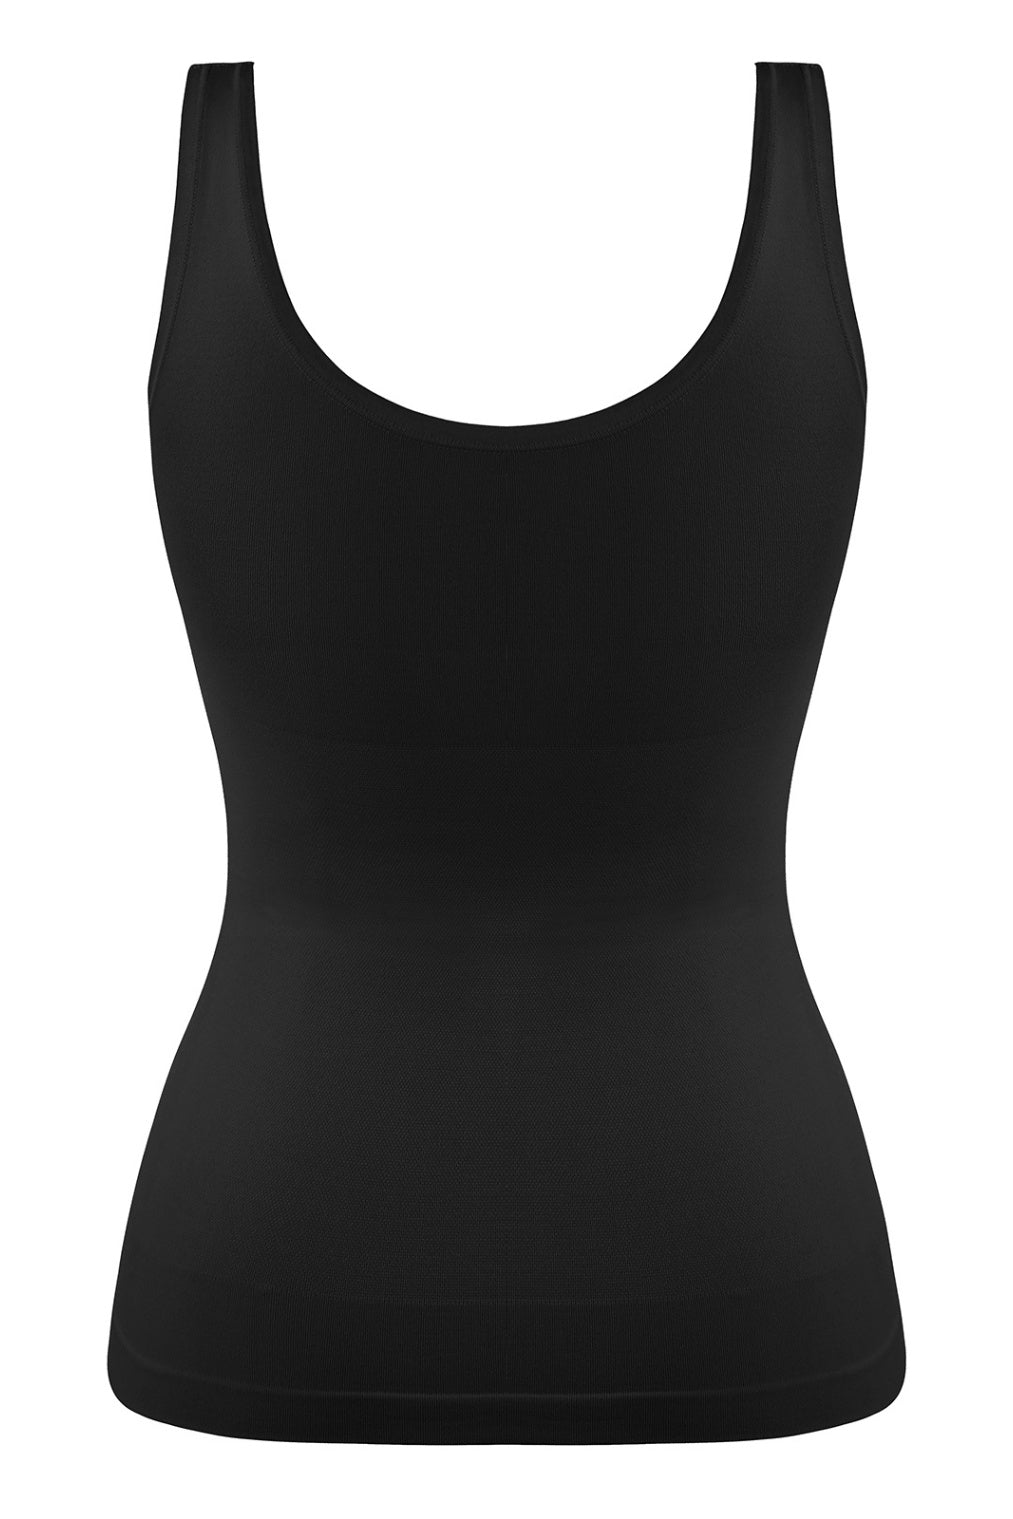 Kimberly Shaping Tank - Black Contour Clothing